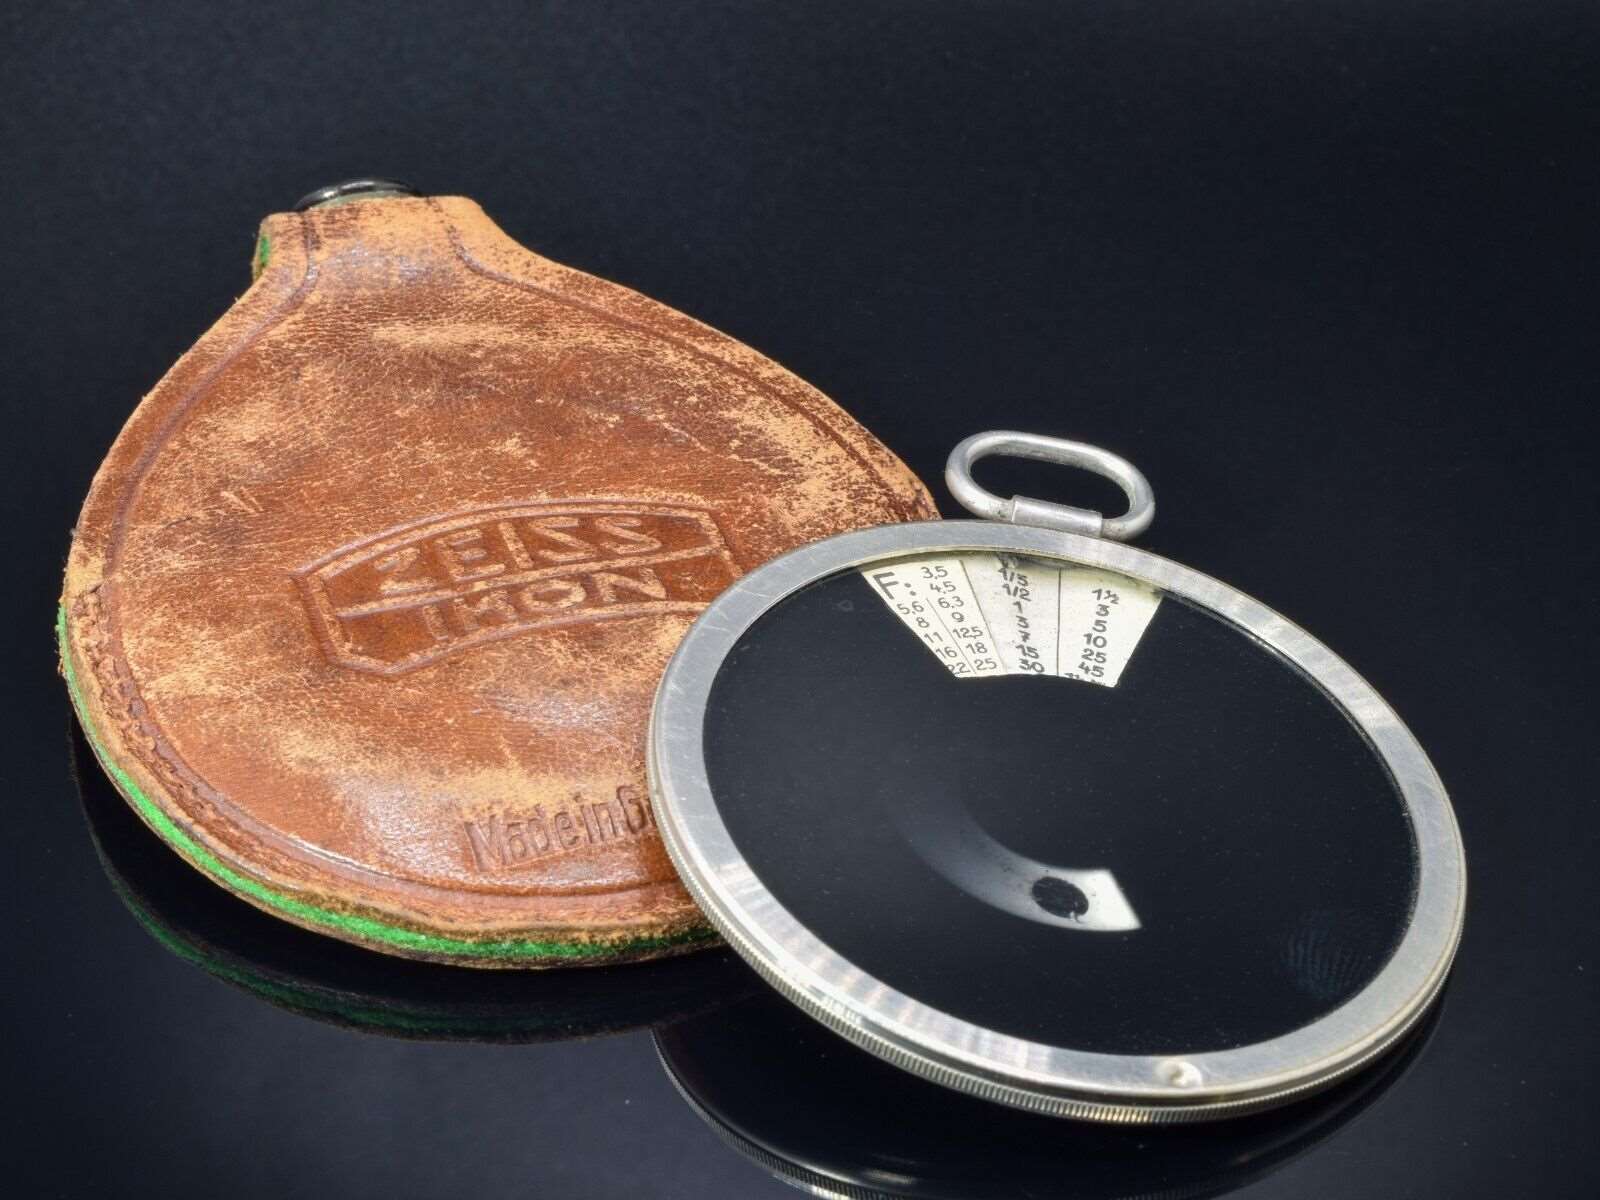 Zeiss Ikon Diaphot Extinction Light Exposure Meter Leather Branded Carry Wallet